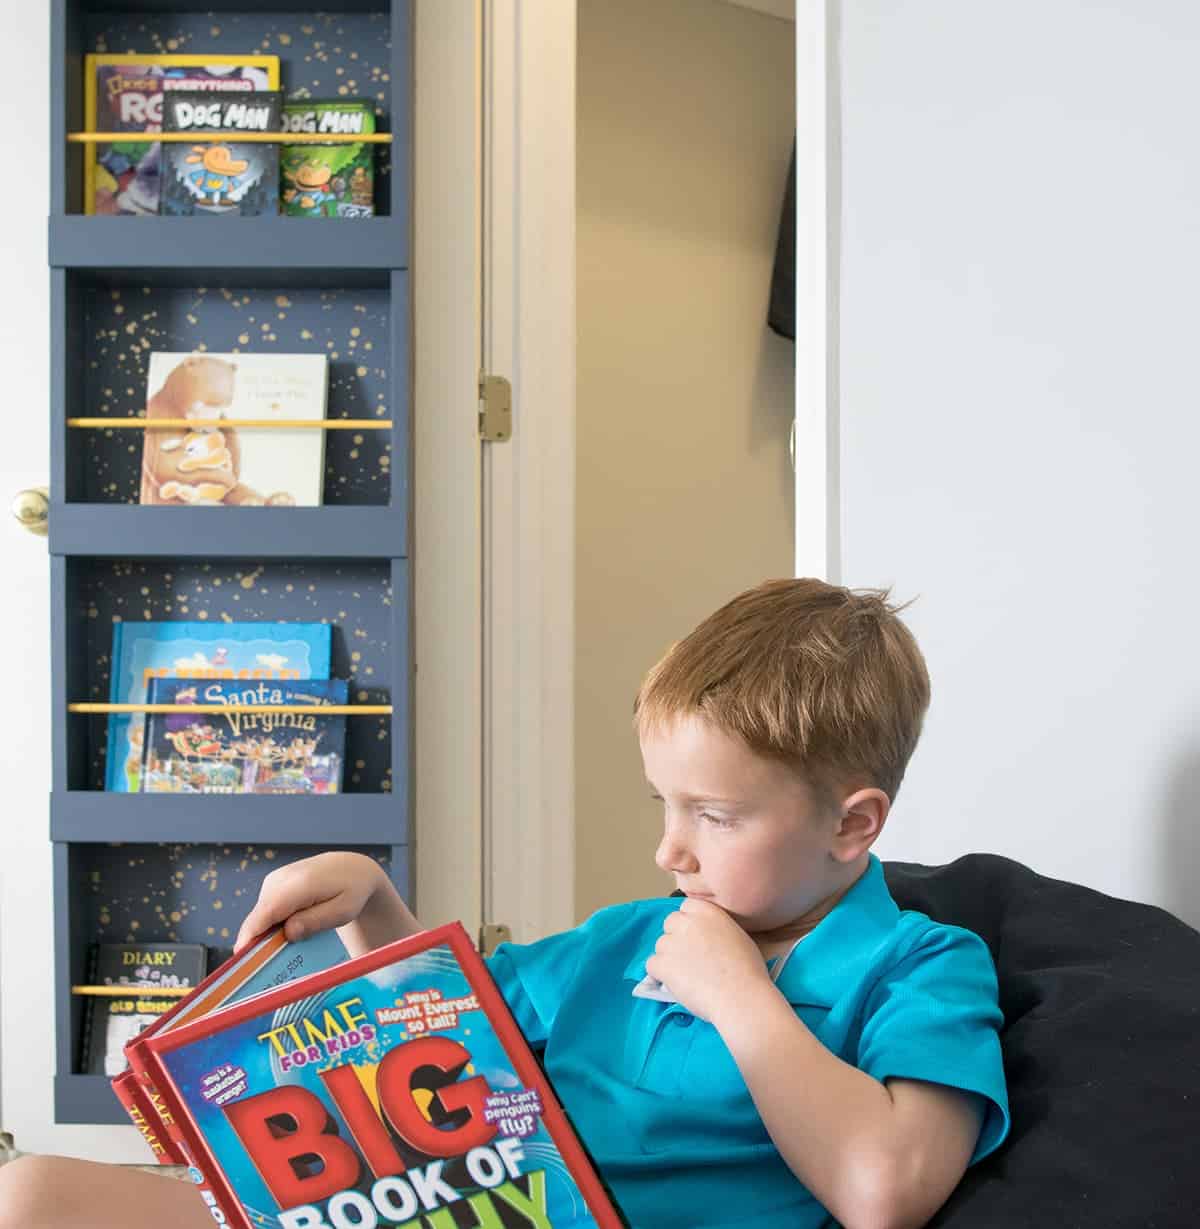 Boy reading a book in front of a bookshelf on a closet door.